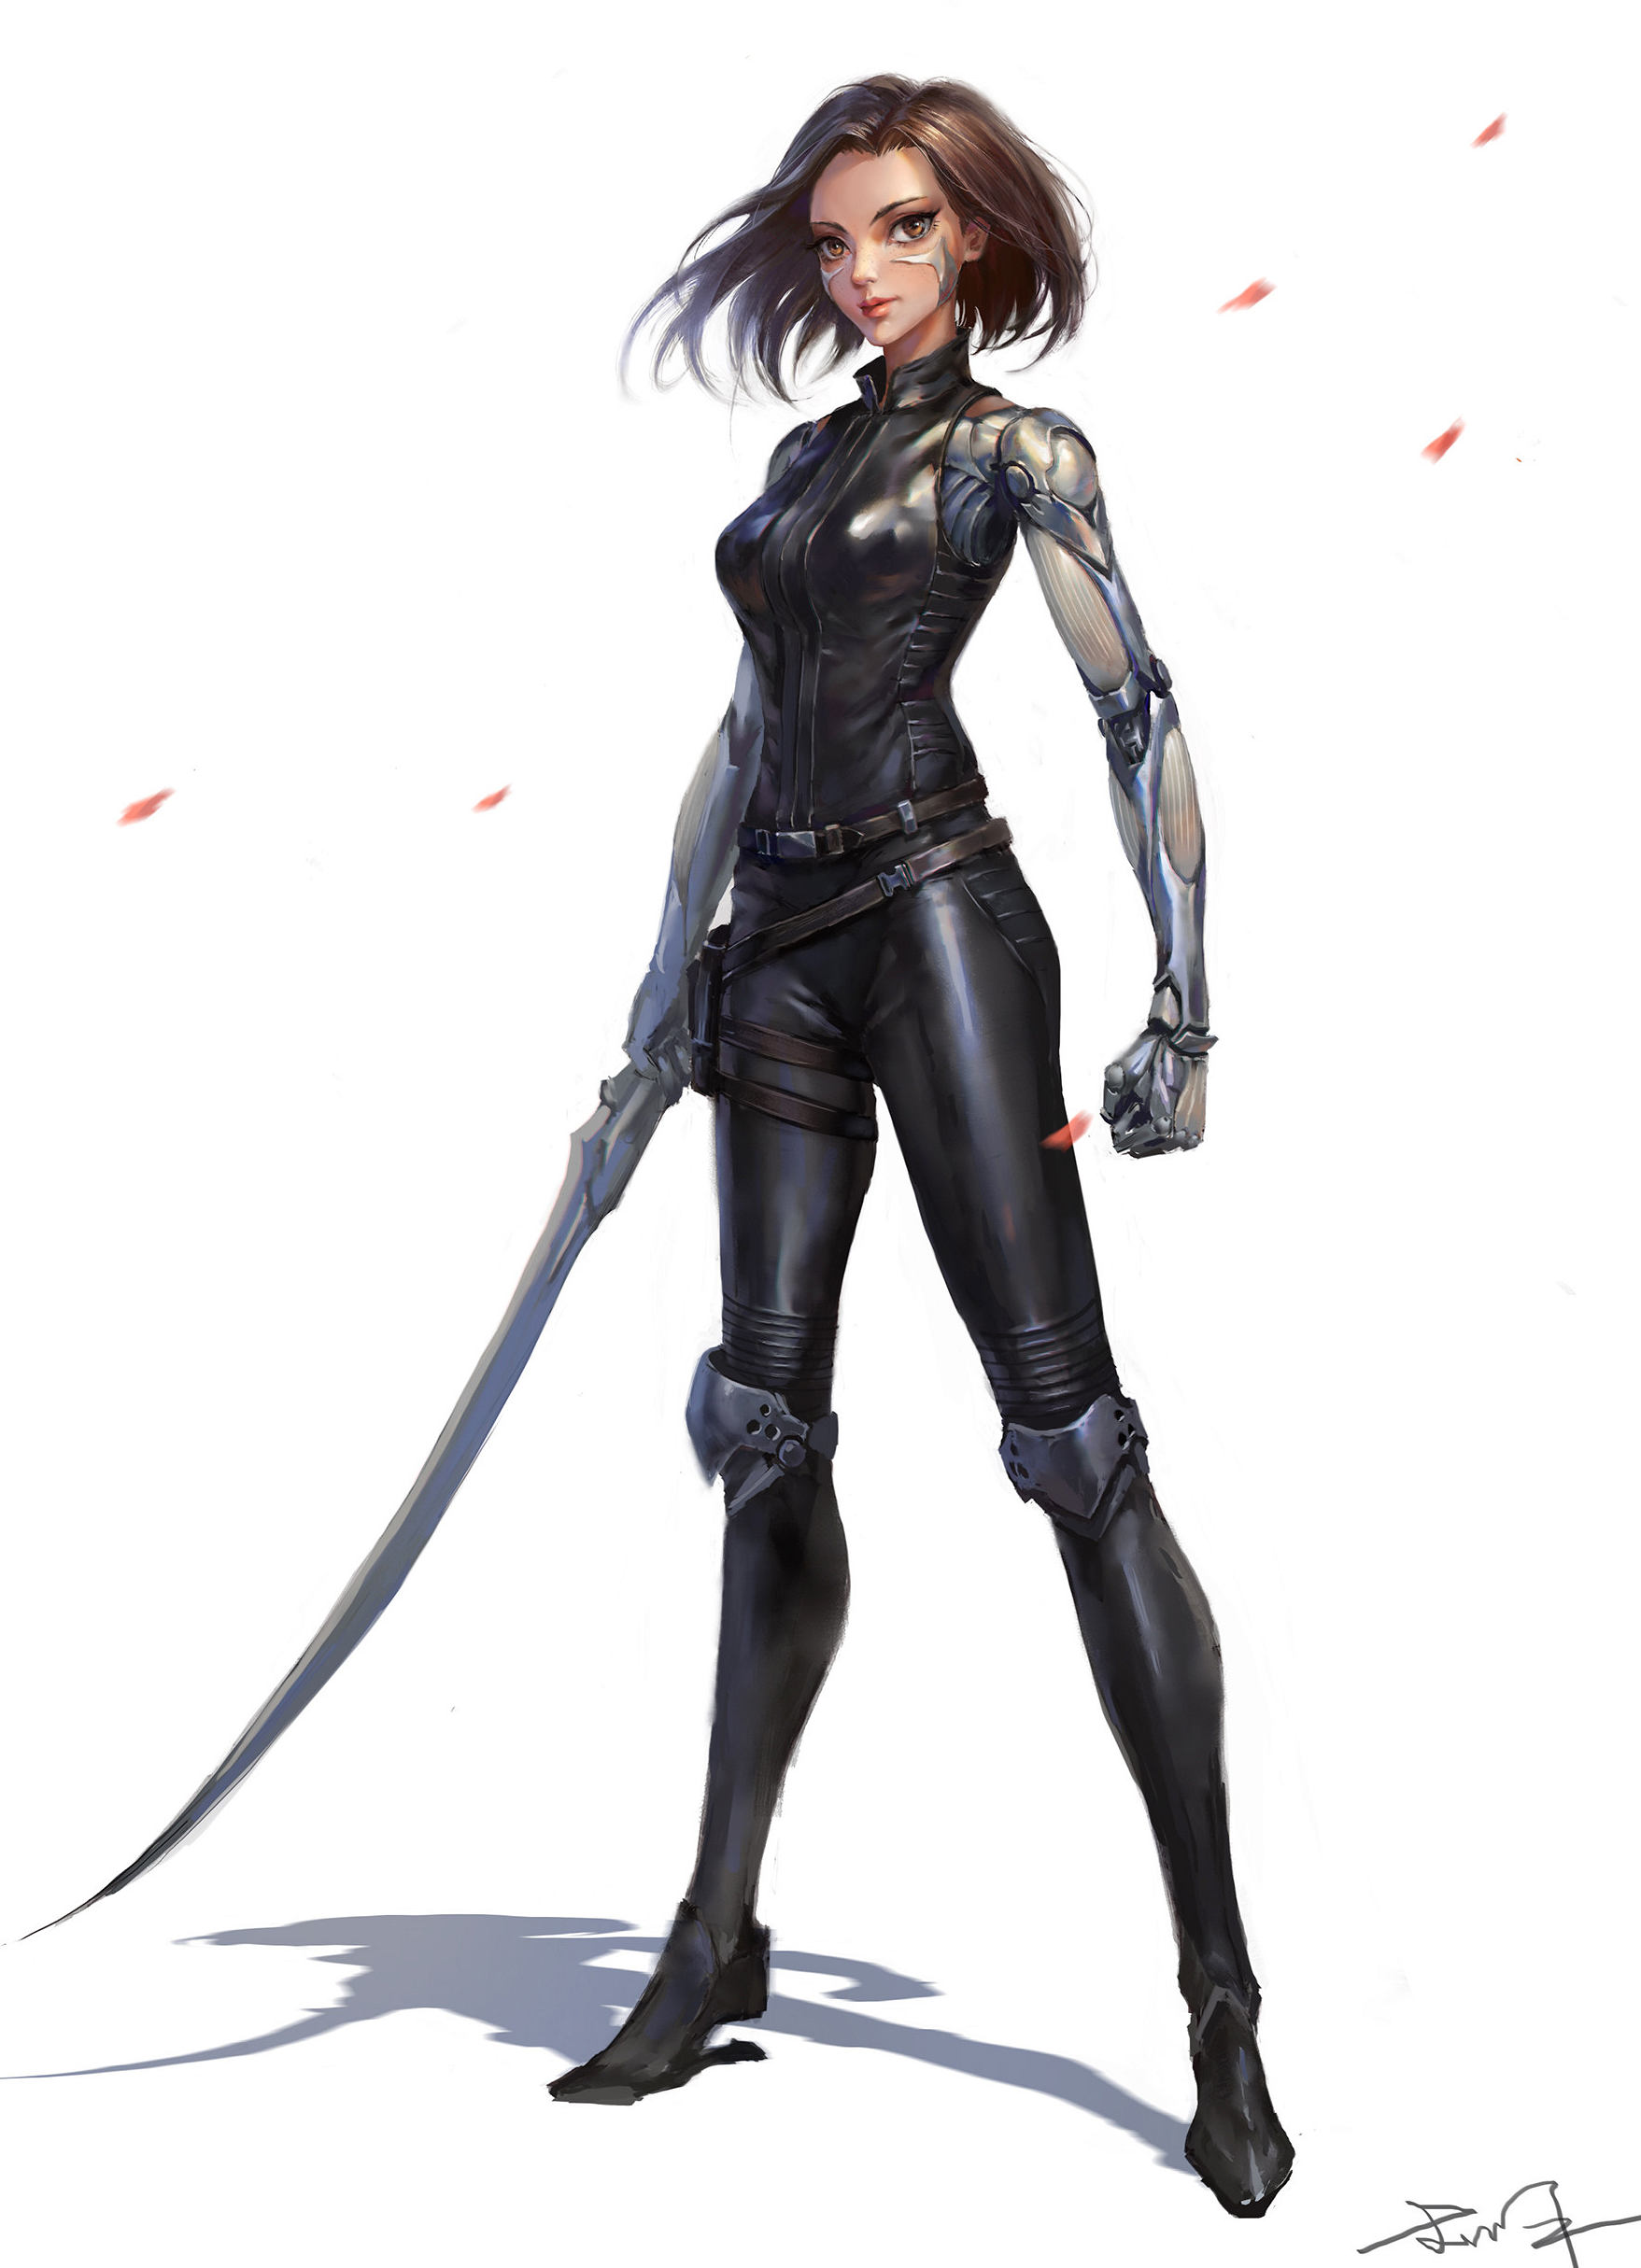 Ciborg girl Alita with sword: Battle Angel Alita fan pic: Other anime (Artist: Yang Liu)